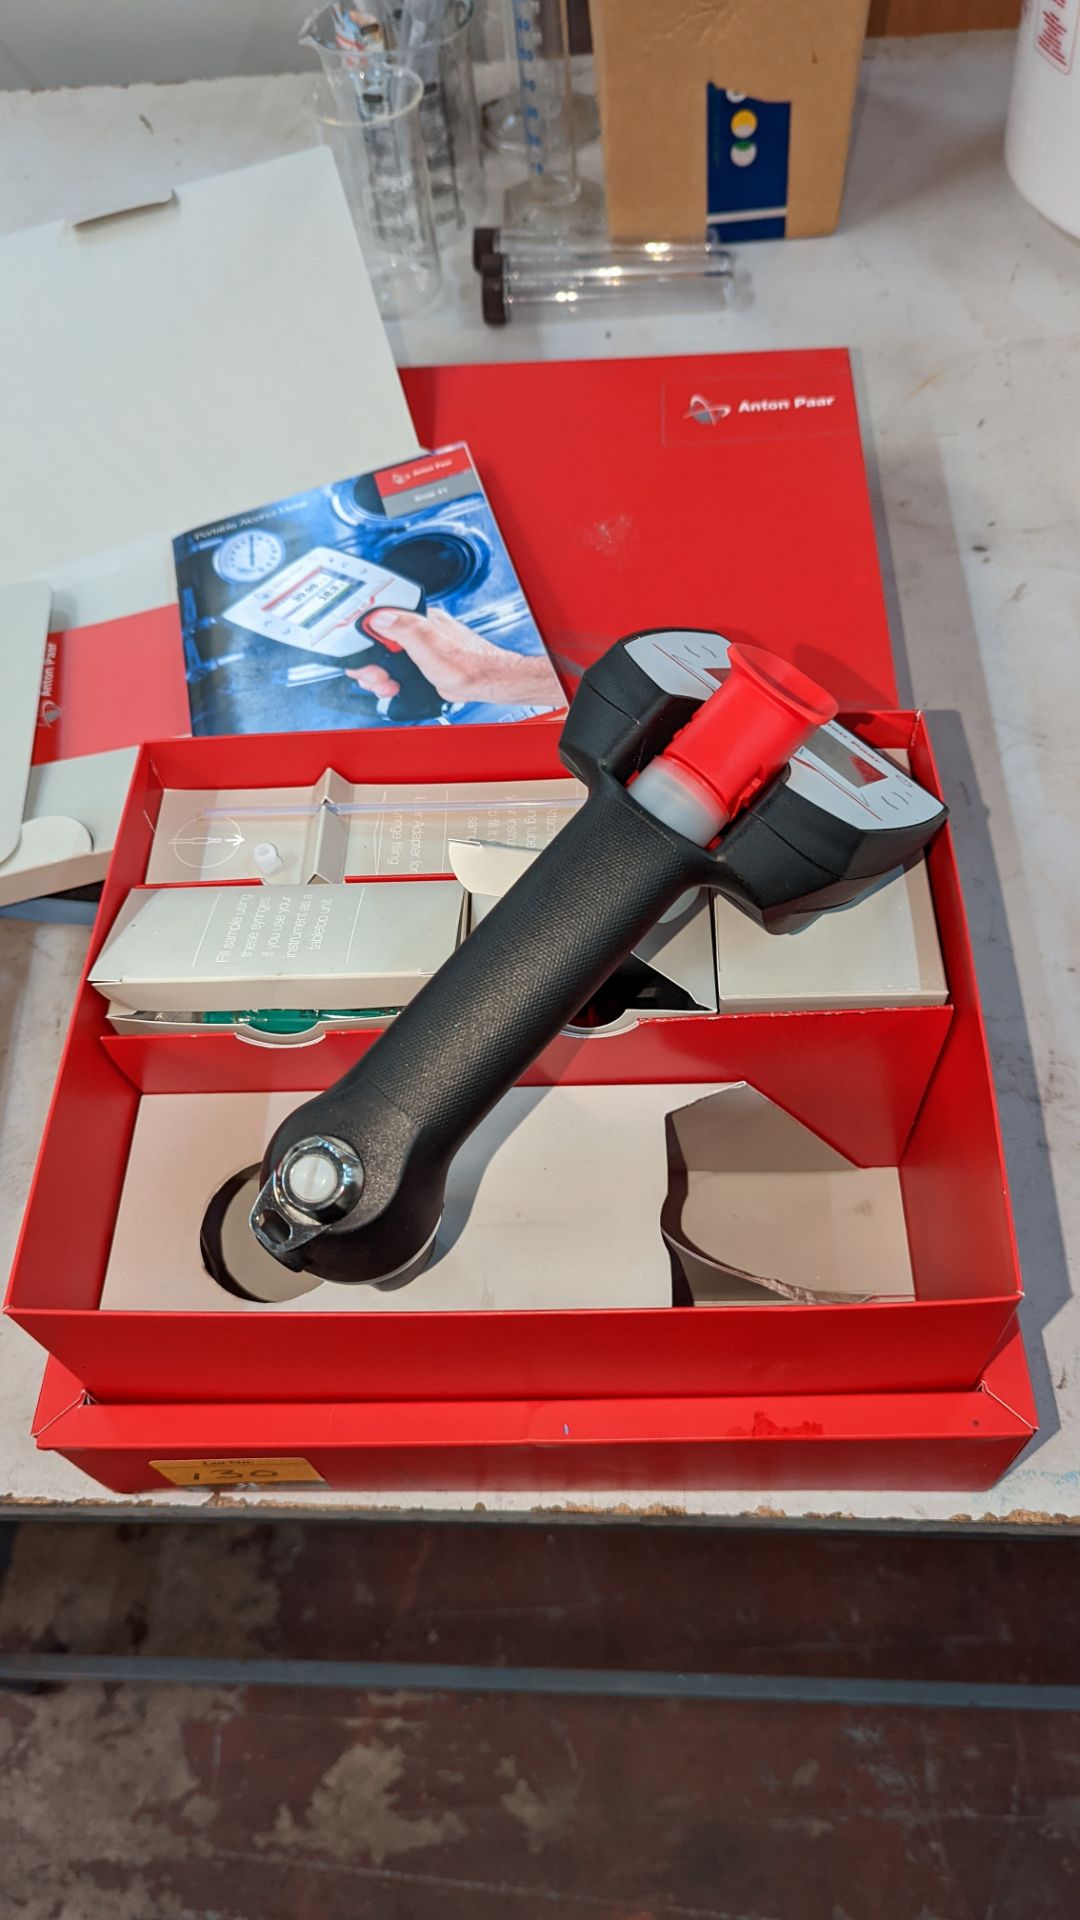 Anton Paar Snap 41 portable alcohol meter/digital hydrometer including box, manual & ancillaries - Image 2 of 7